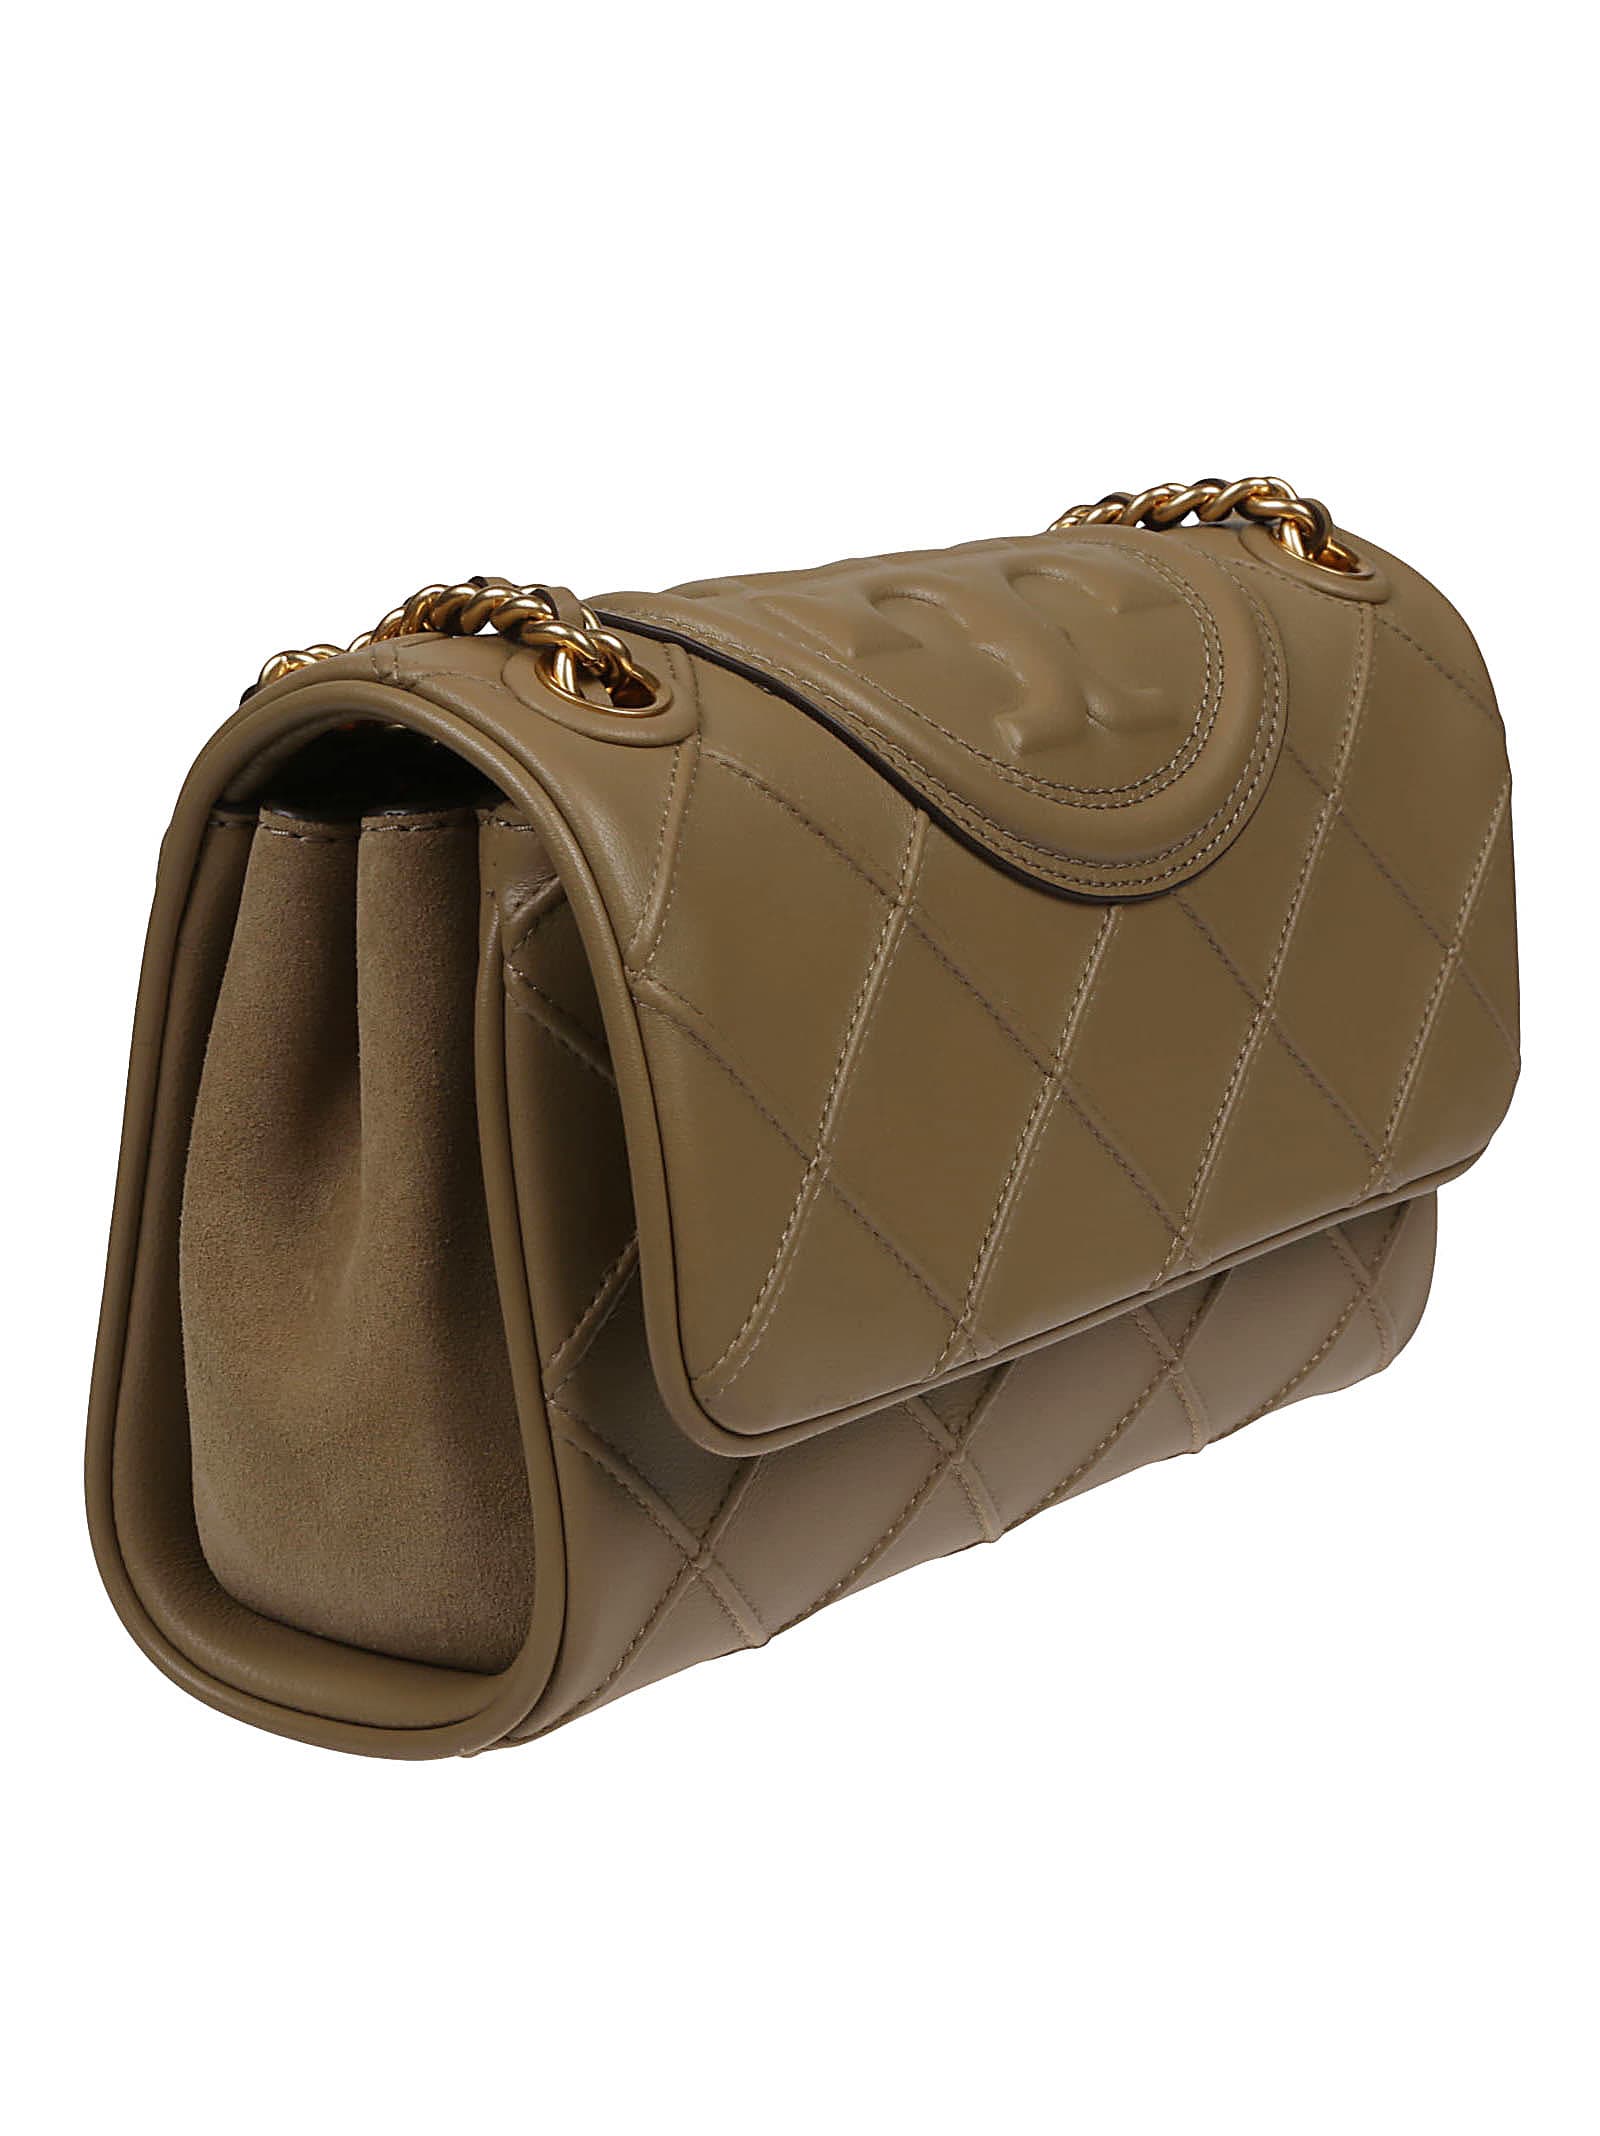 Fleming Soft Small Hobo Bag - Tory Burch - Pebblestone - Leather